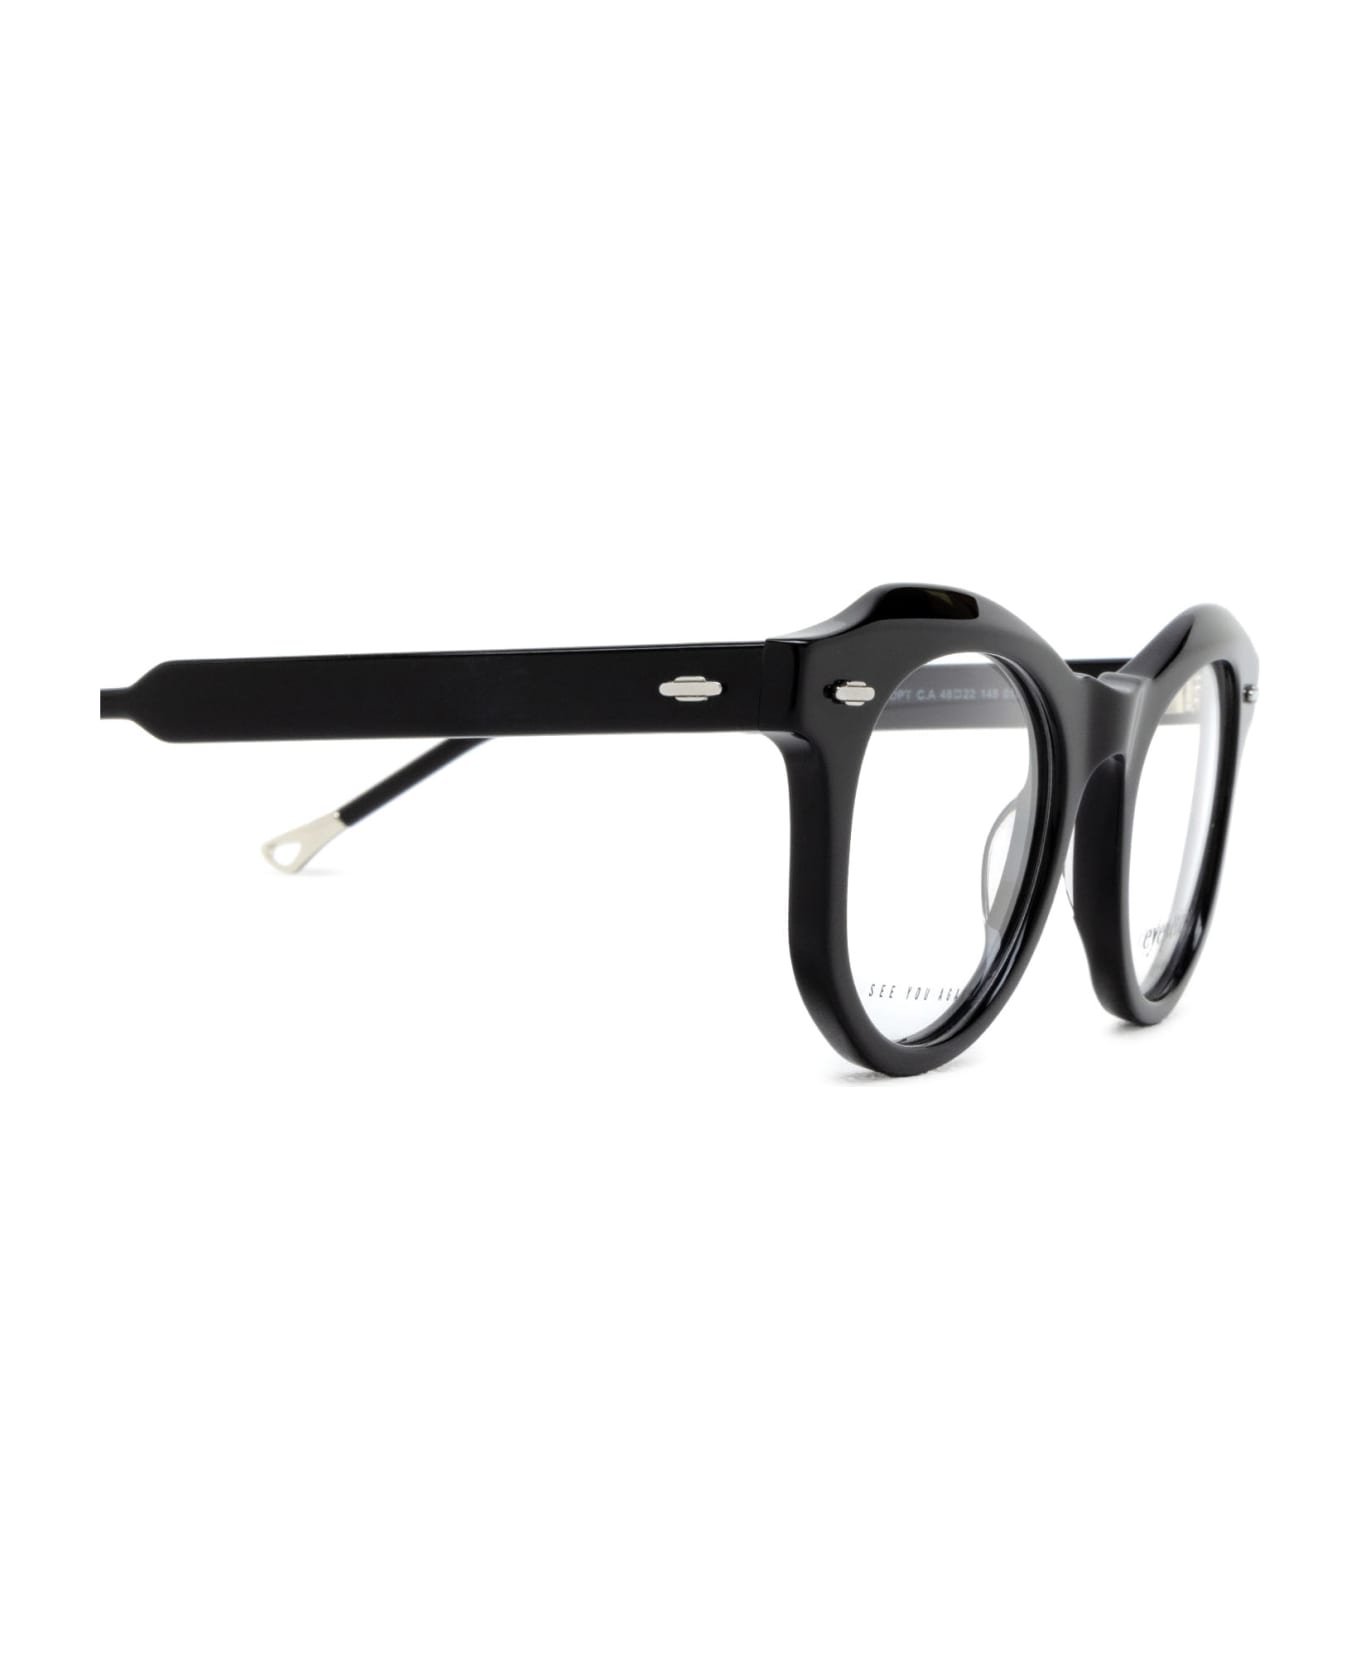 Eyepetizer Magali Opt Black Glasses - Black アイウェア